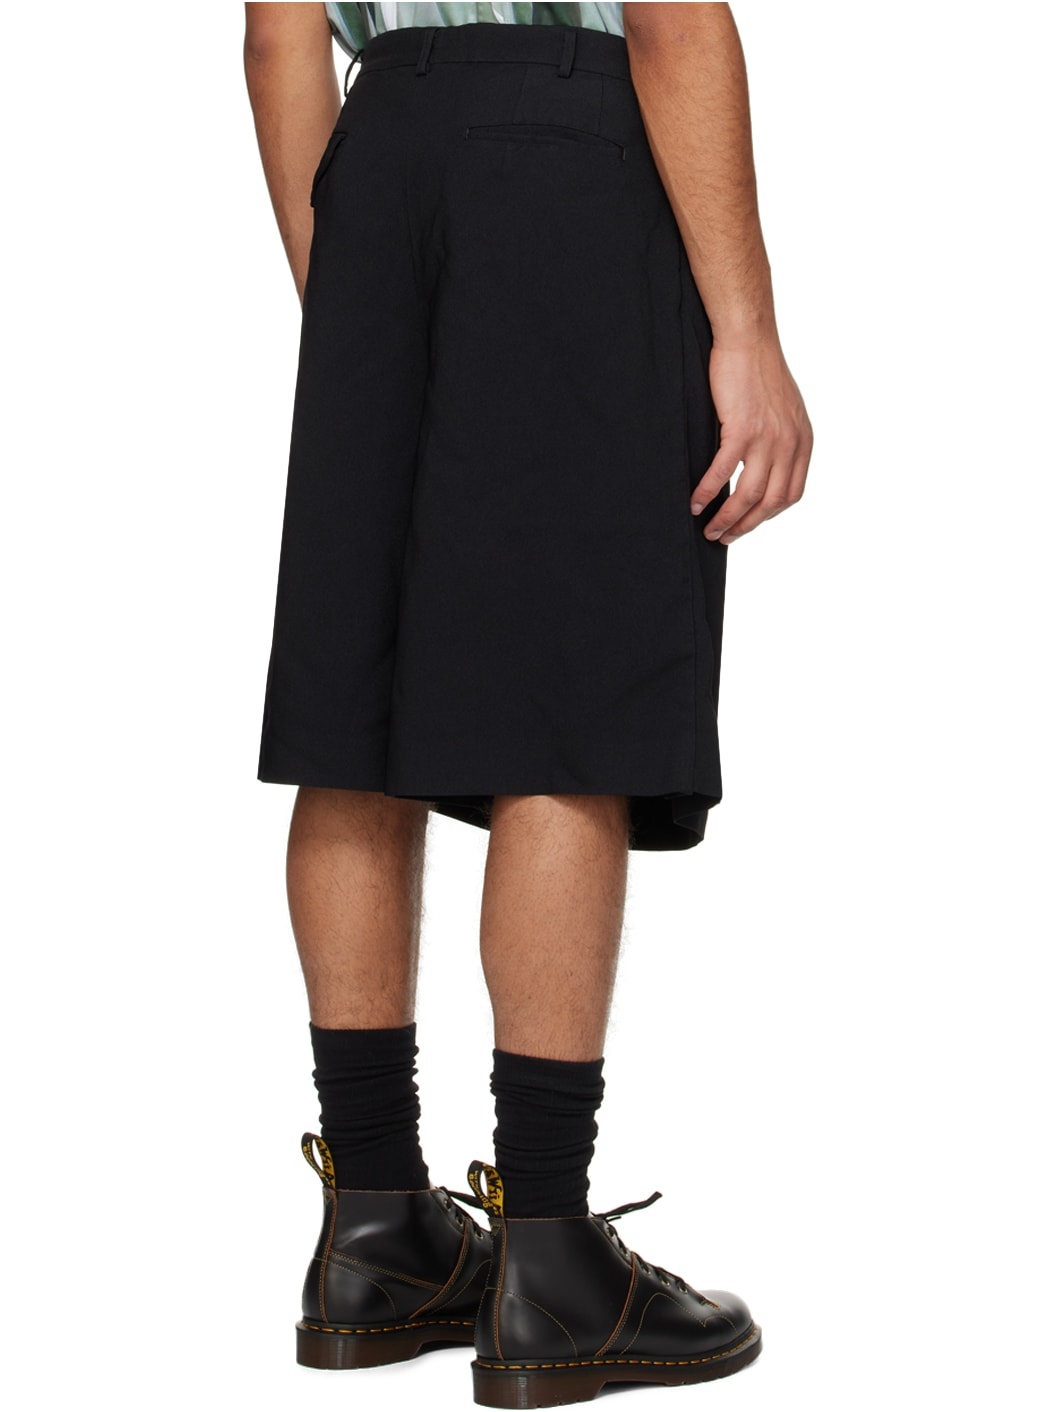 Black Layered Shorts - 3